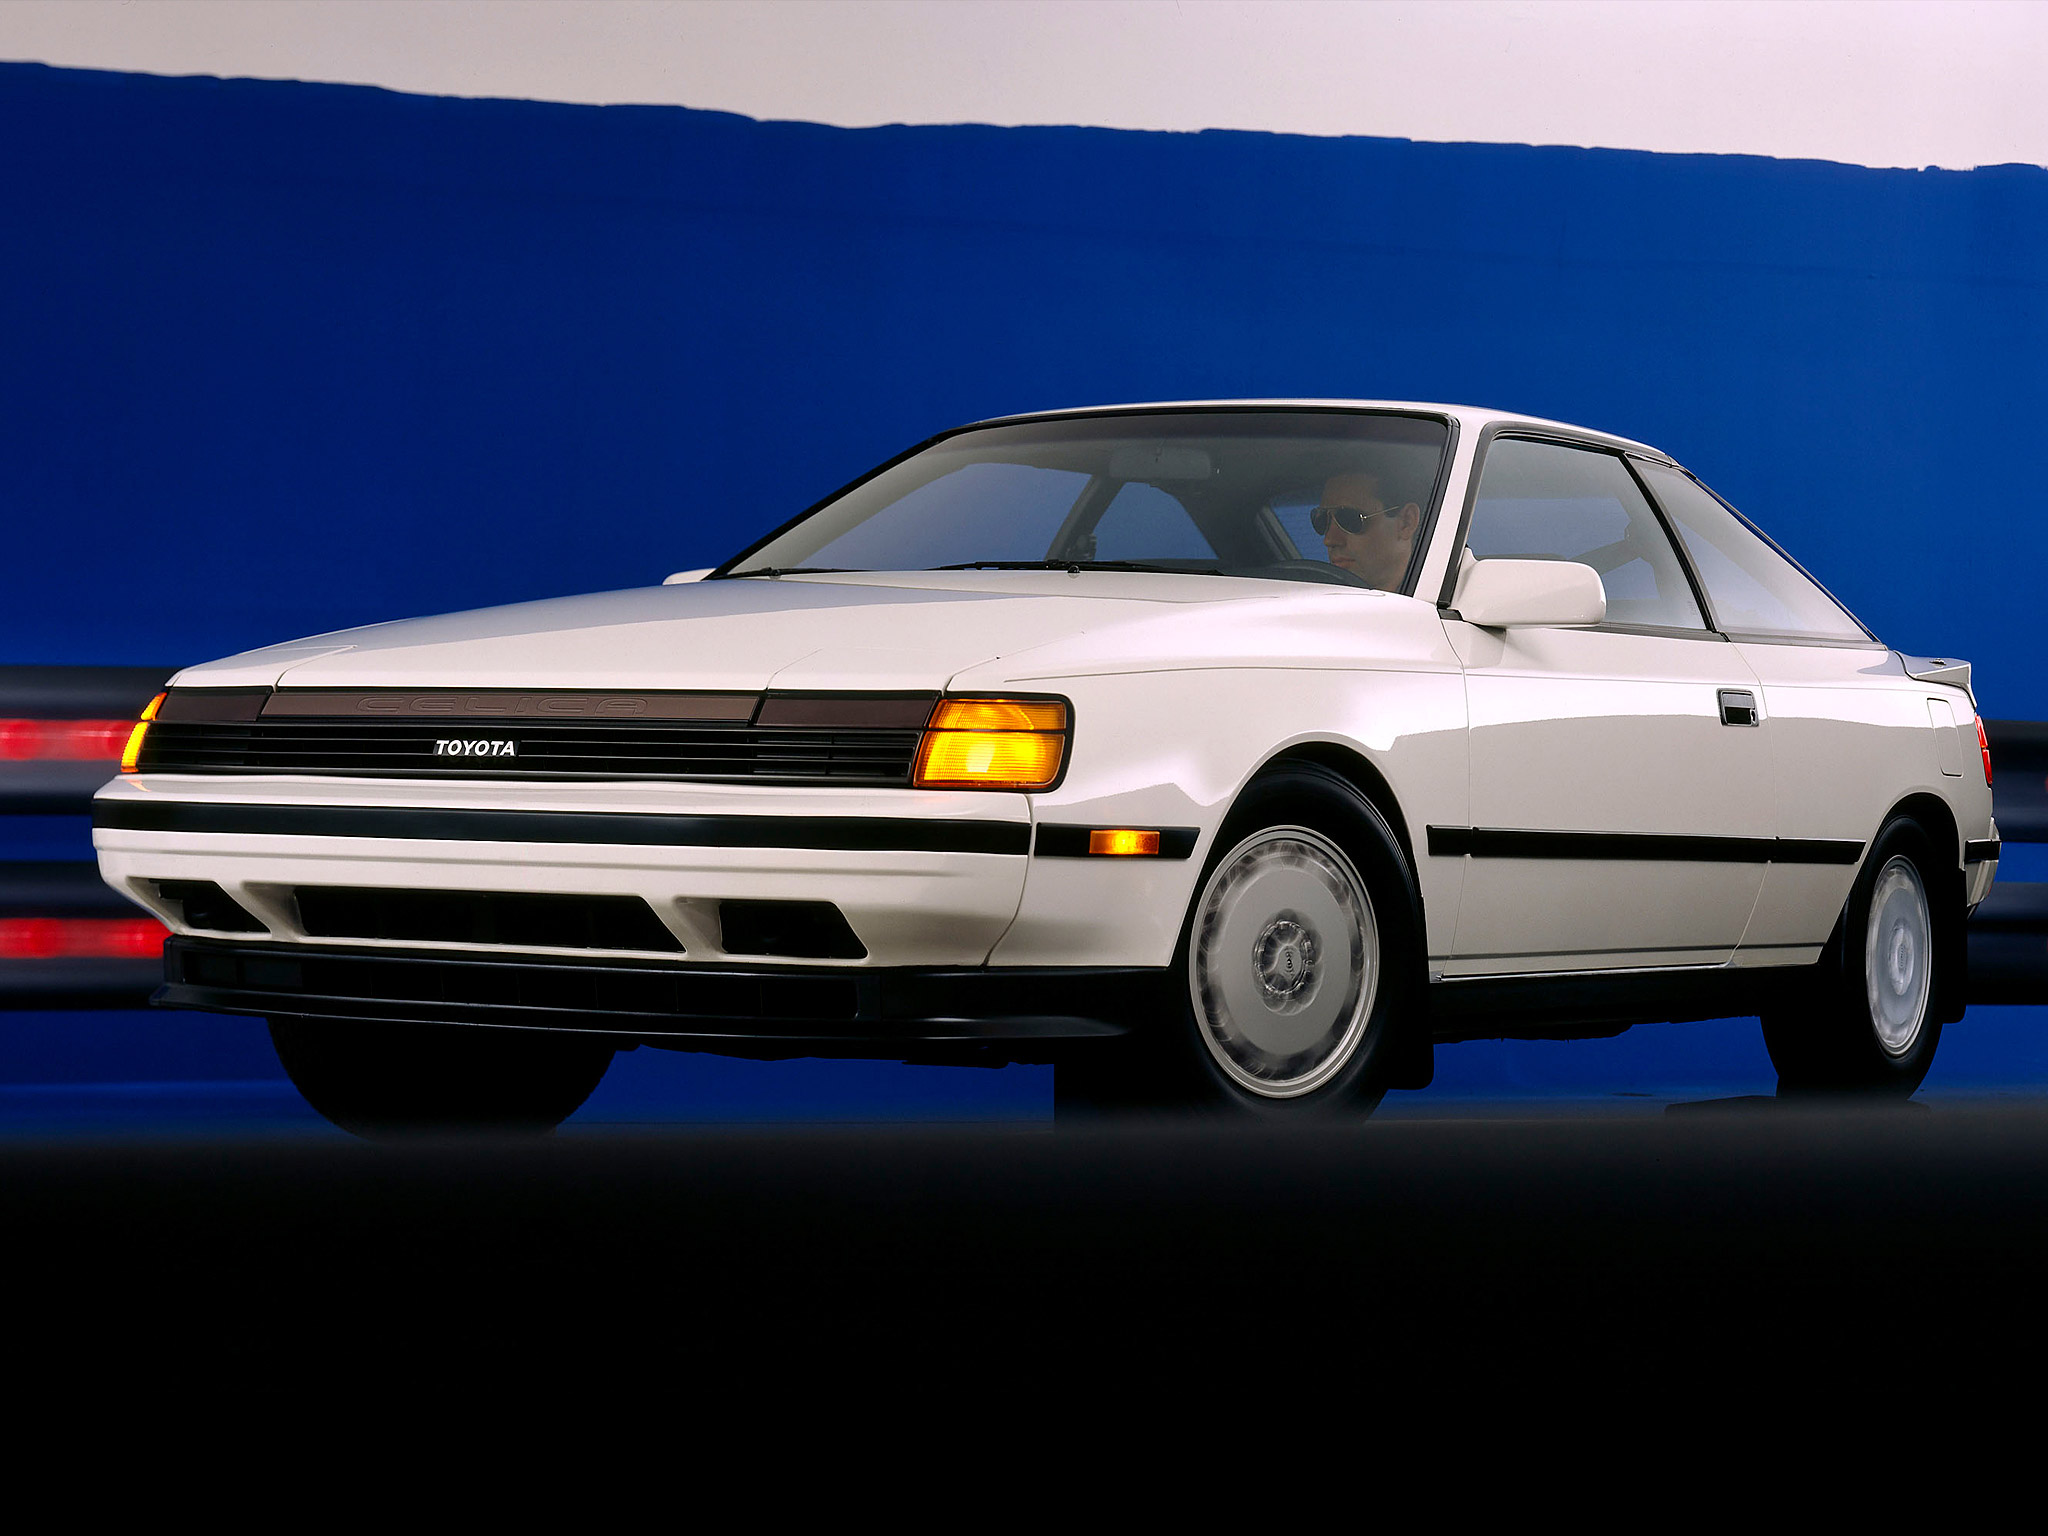  1988 Toyota Celica Wallpaper.